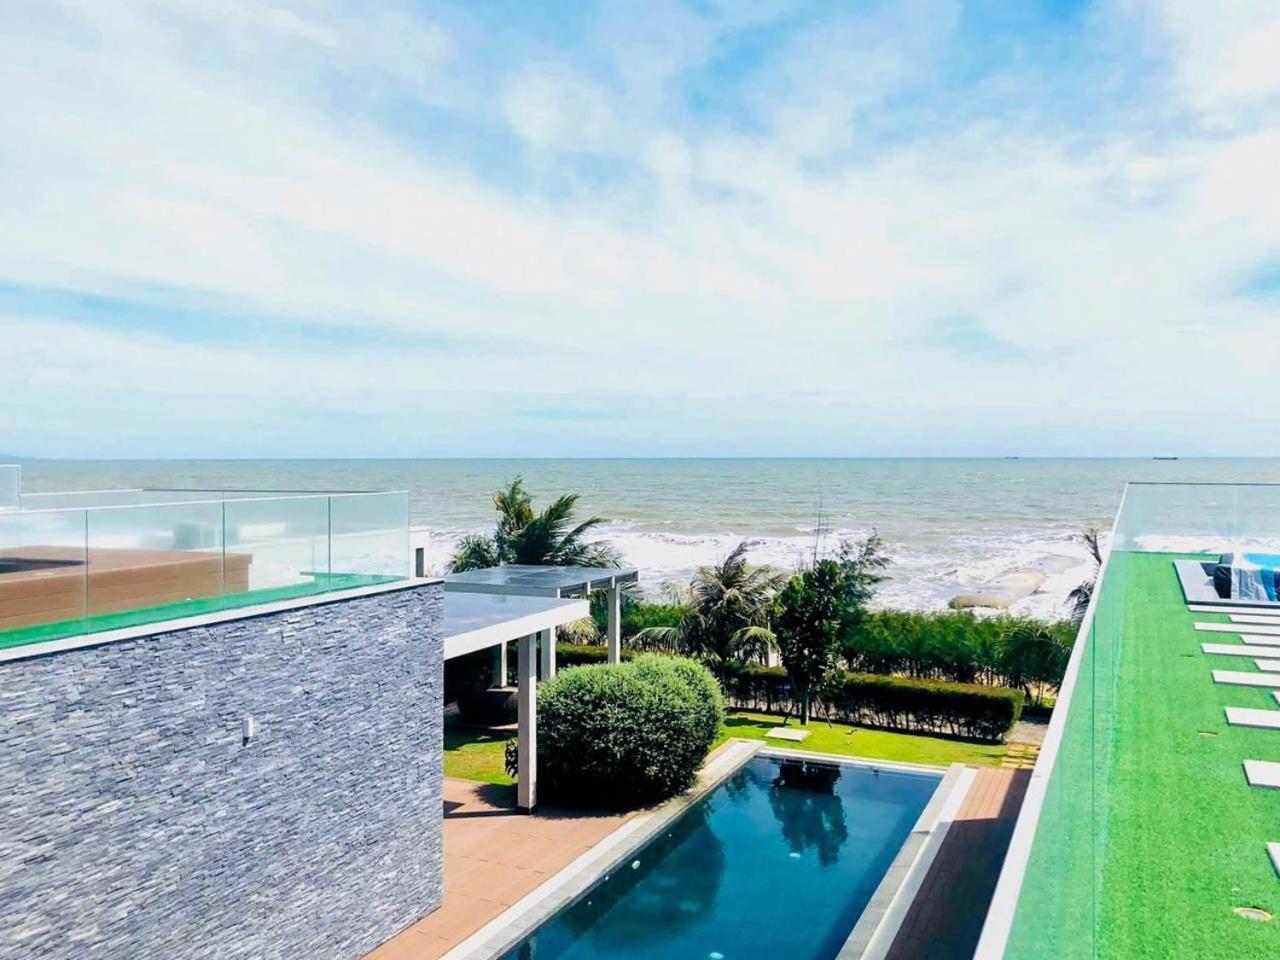 Oceanami Villas & Beach Club Long Hai At 1, 3, 4 Bedroom & 5, 6 Bedroom Beachfront Private Pool 외부 사진